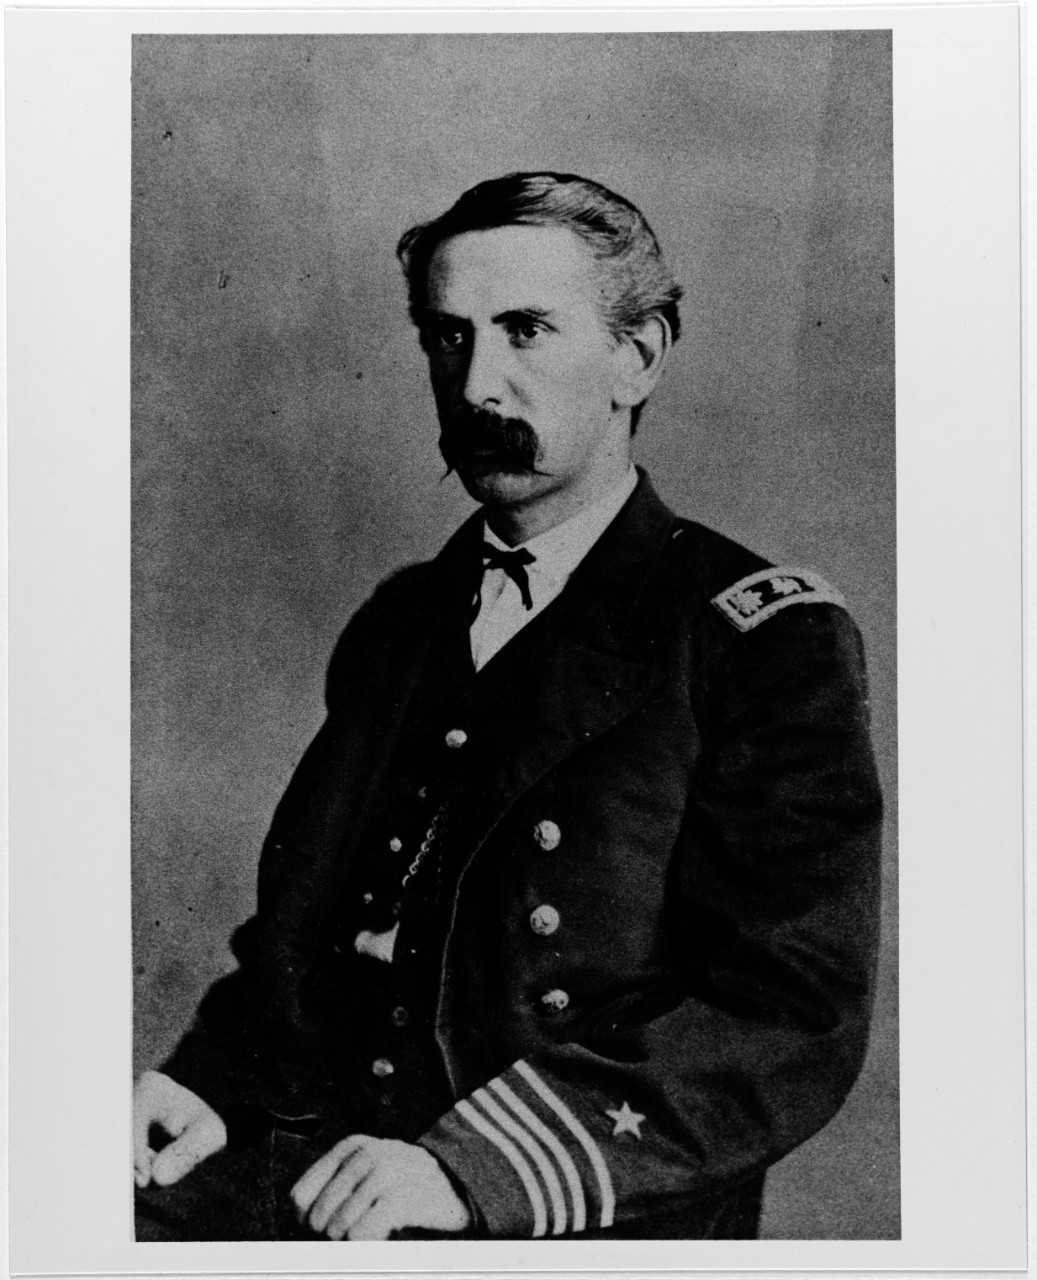 Lieutenant Commander Nicoll Ludlow, USN